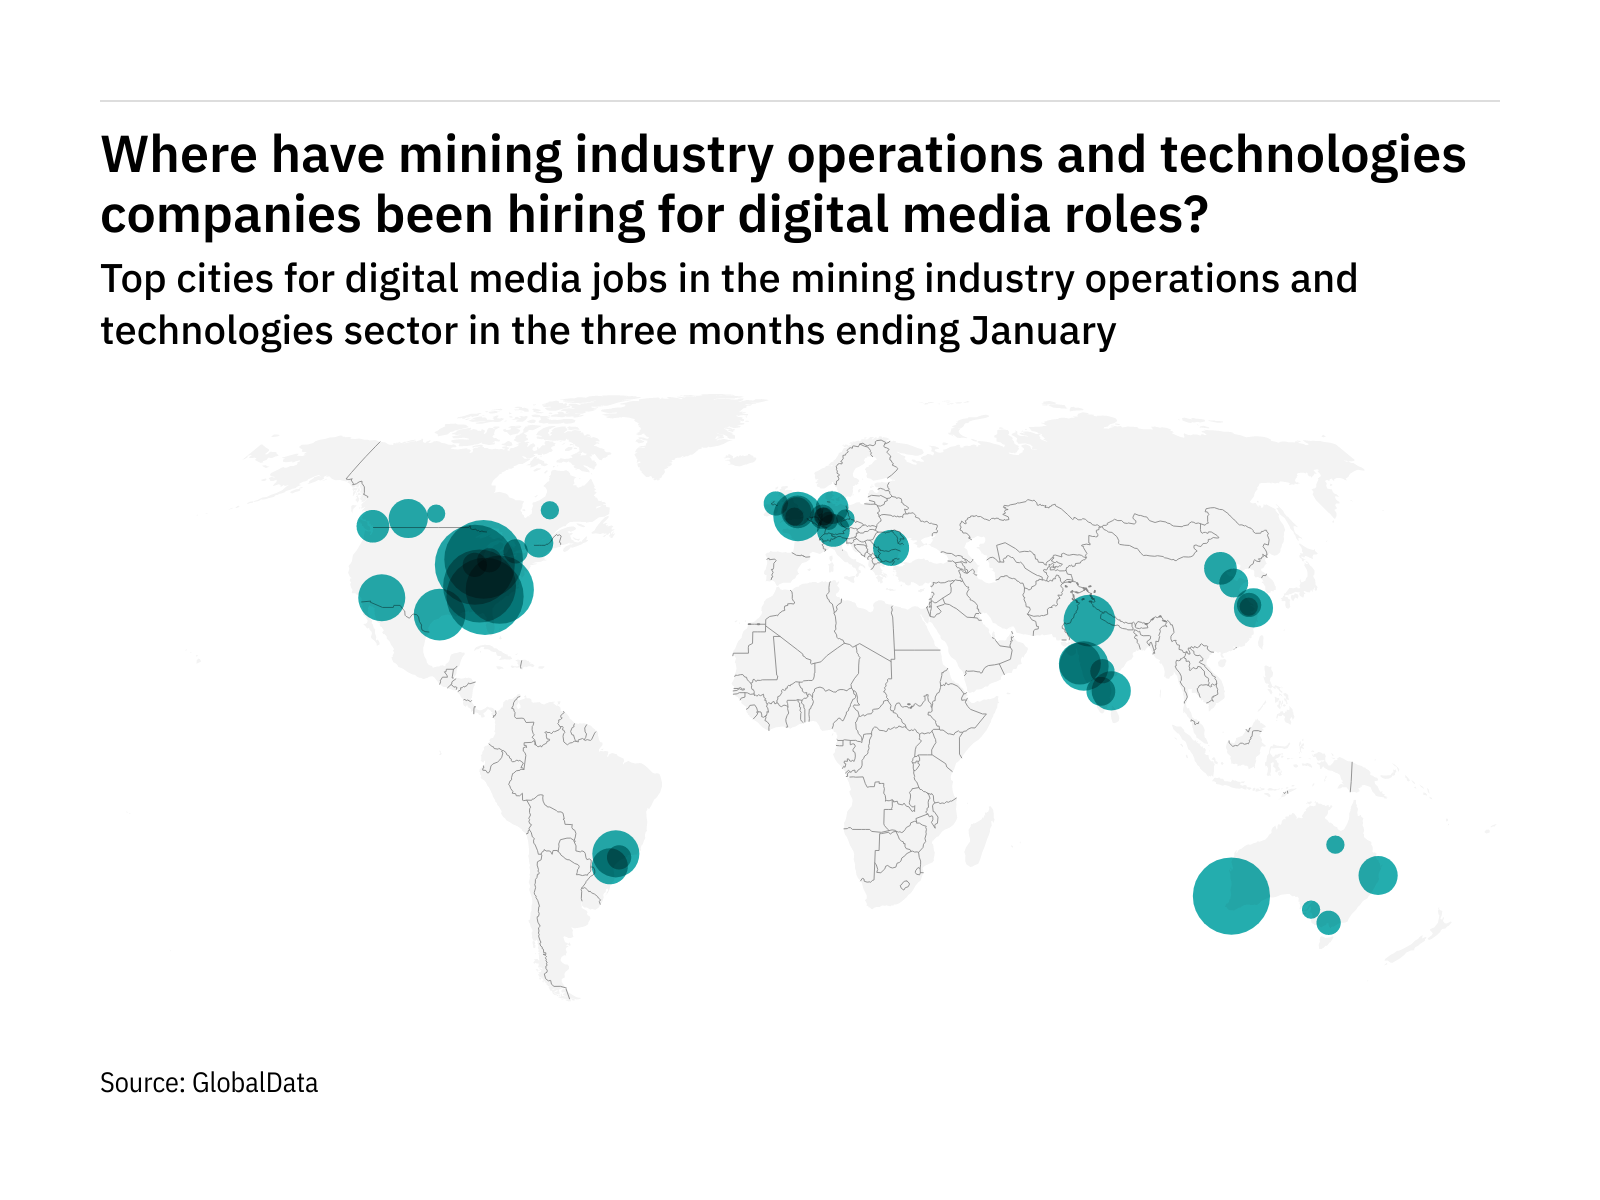 North America is seeing a hiring boom in mining industry digital media roles